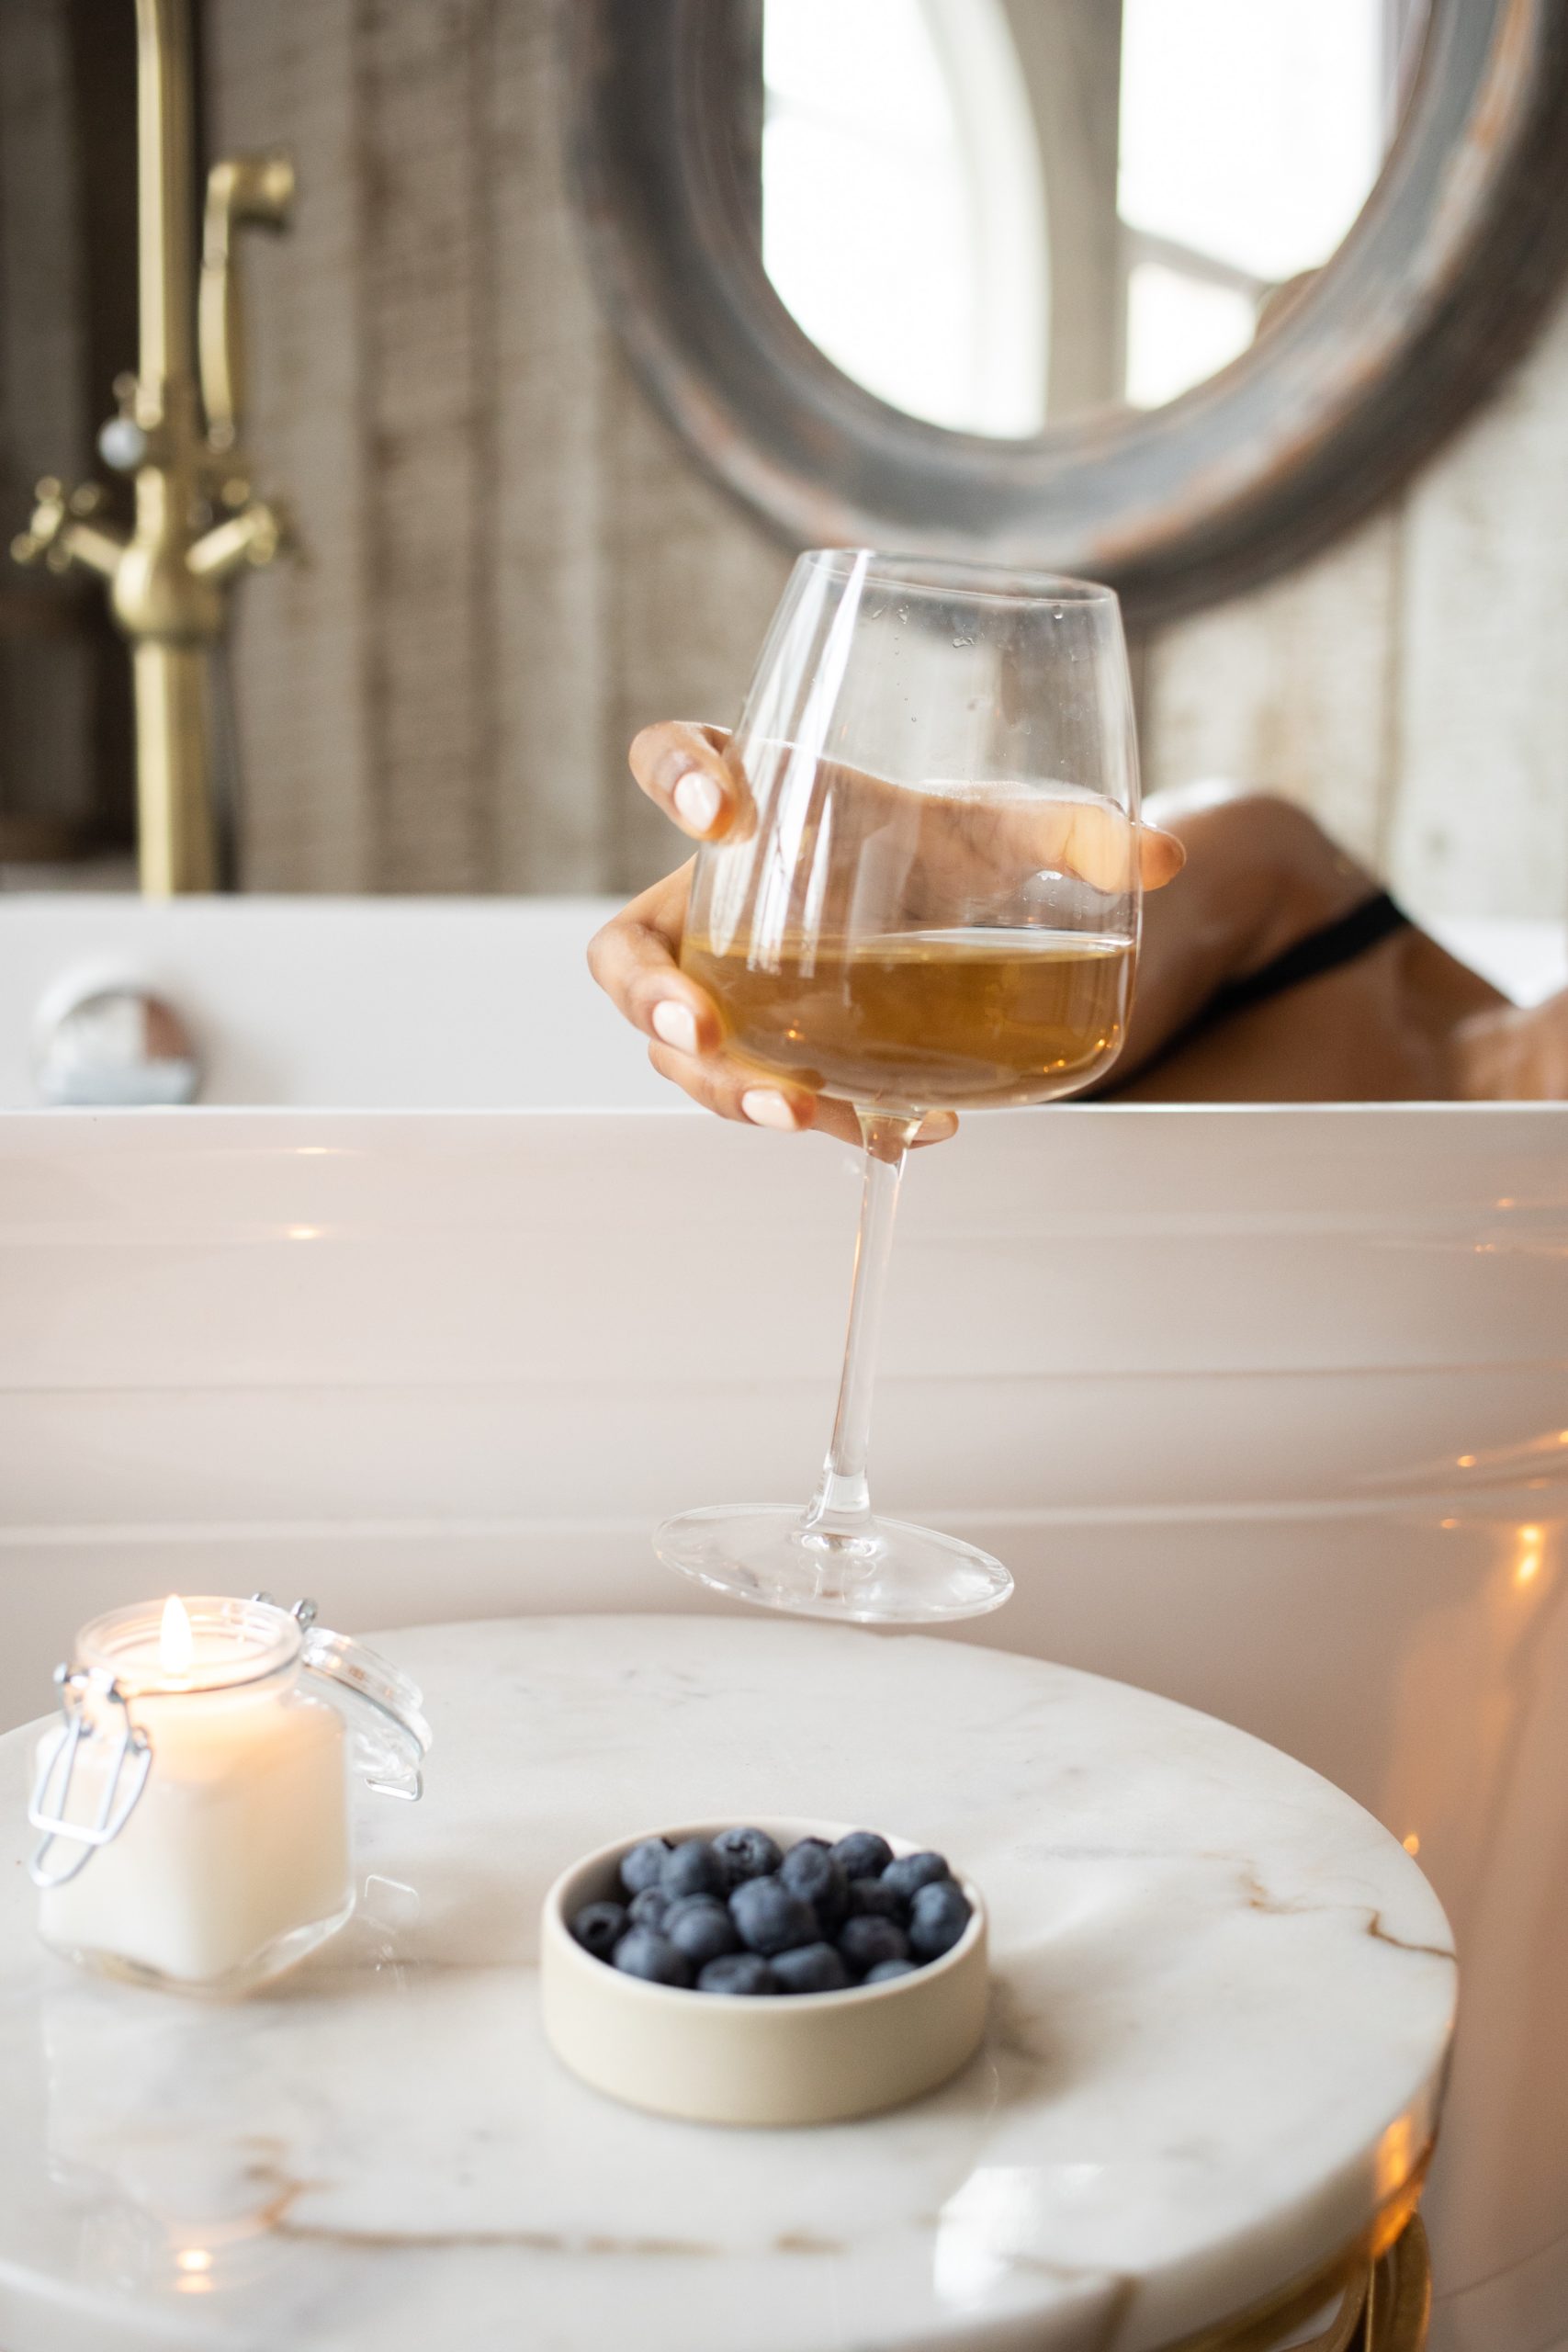 divorcee holding glass of wine in bathtub